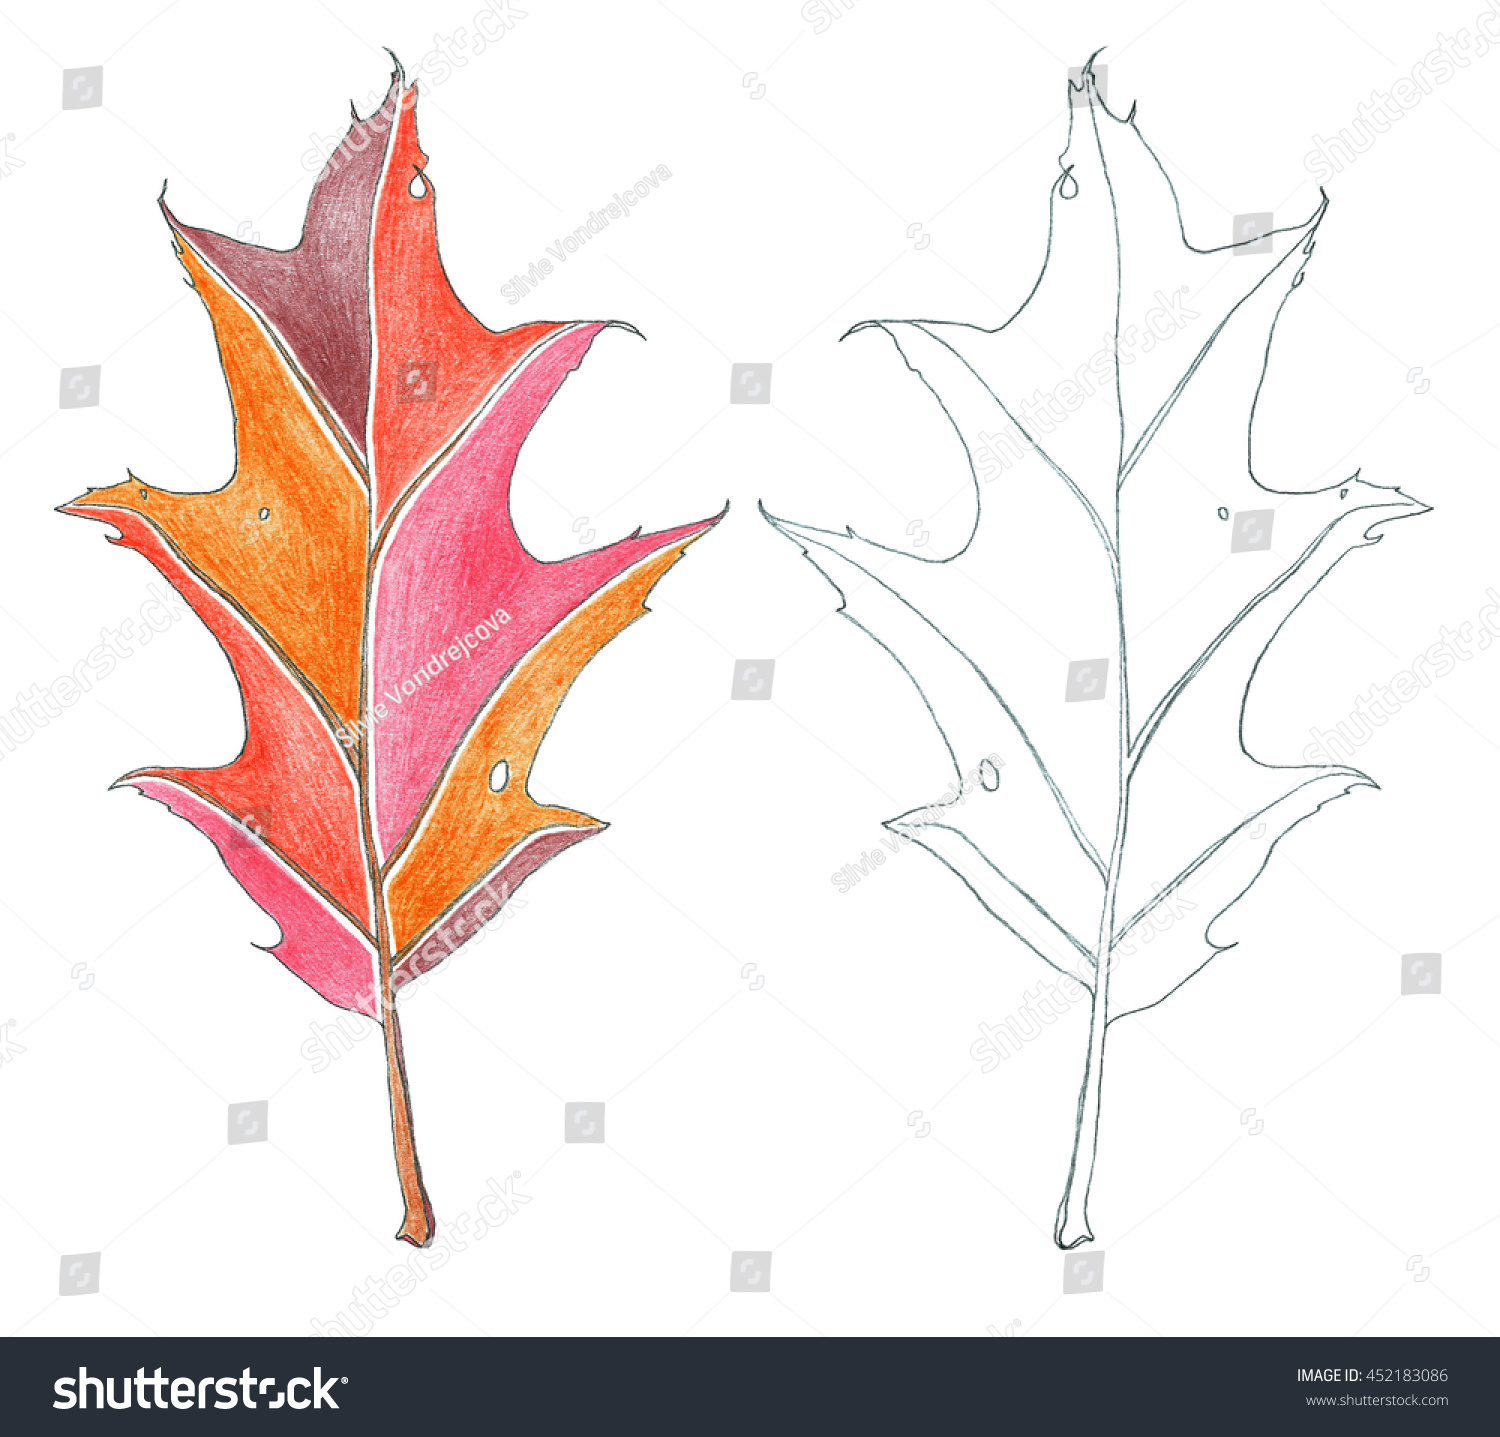 Red Oak Tree Leaf Fallen Leaves Stock Illustration 452183086 ...